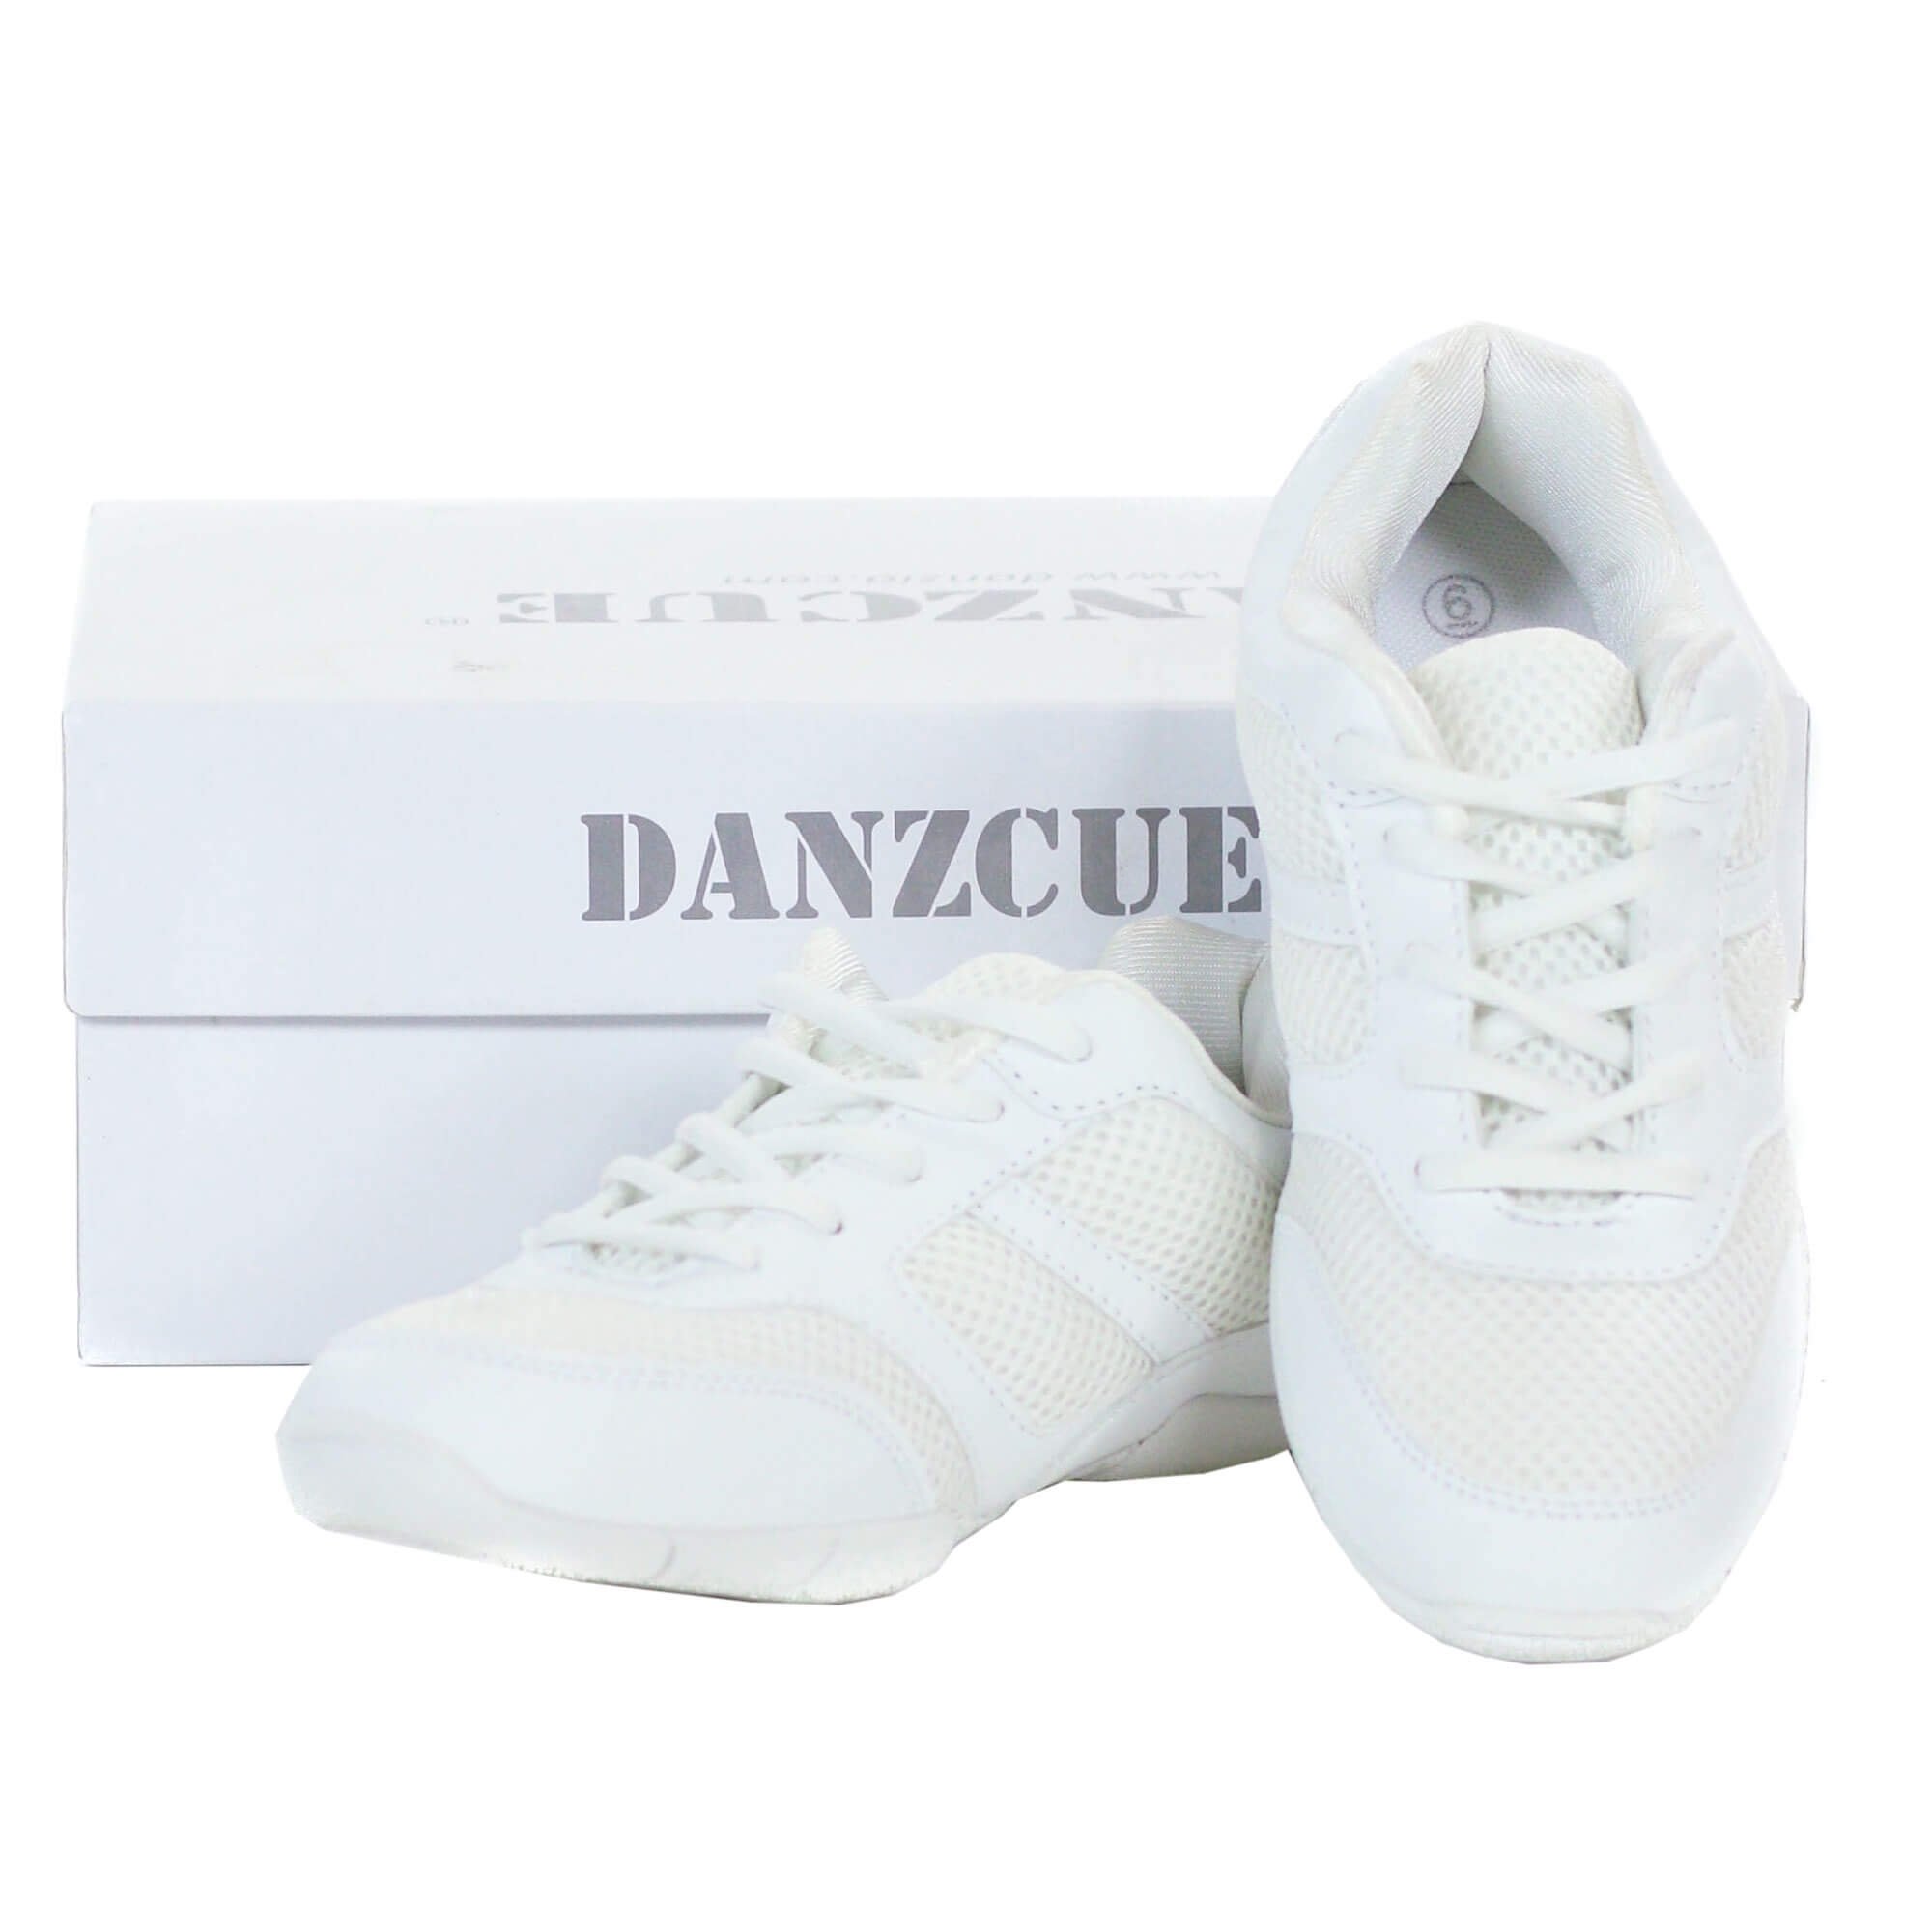 Danzcue Cheer Shoe - Click Image to Close